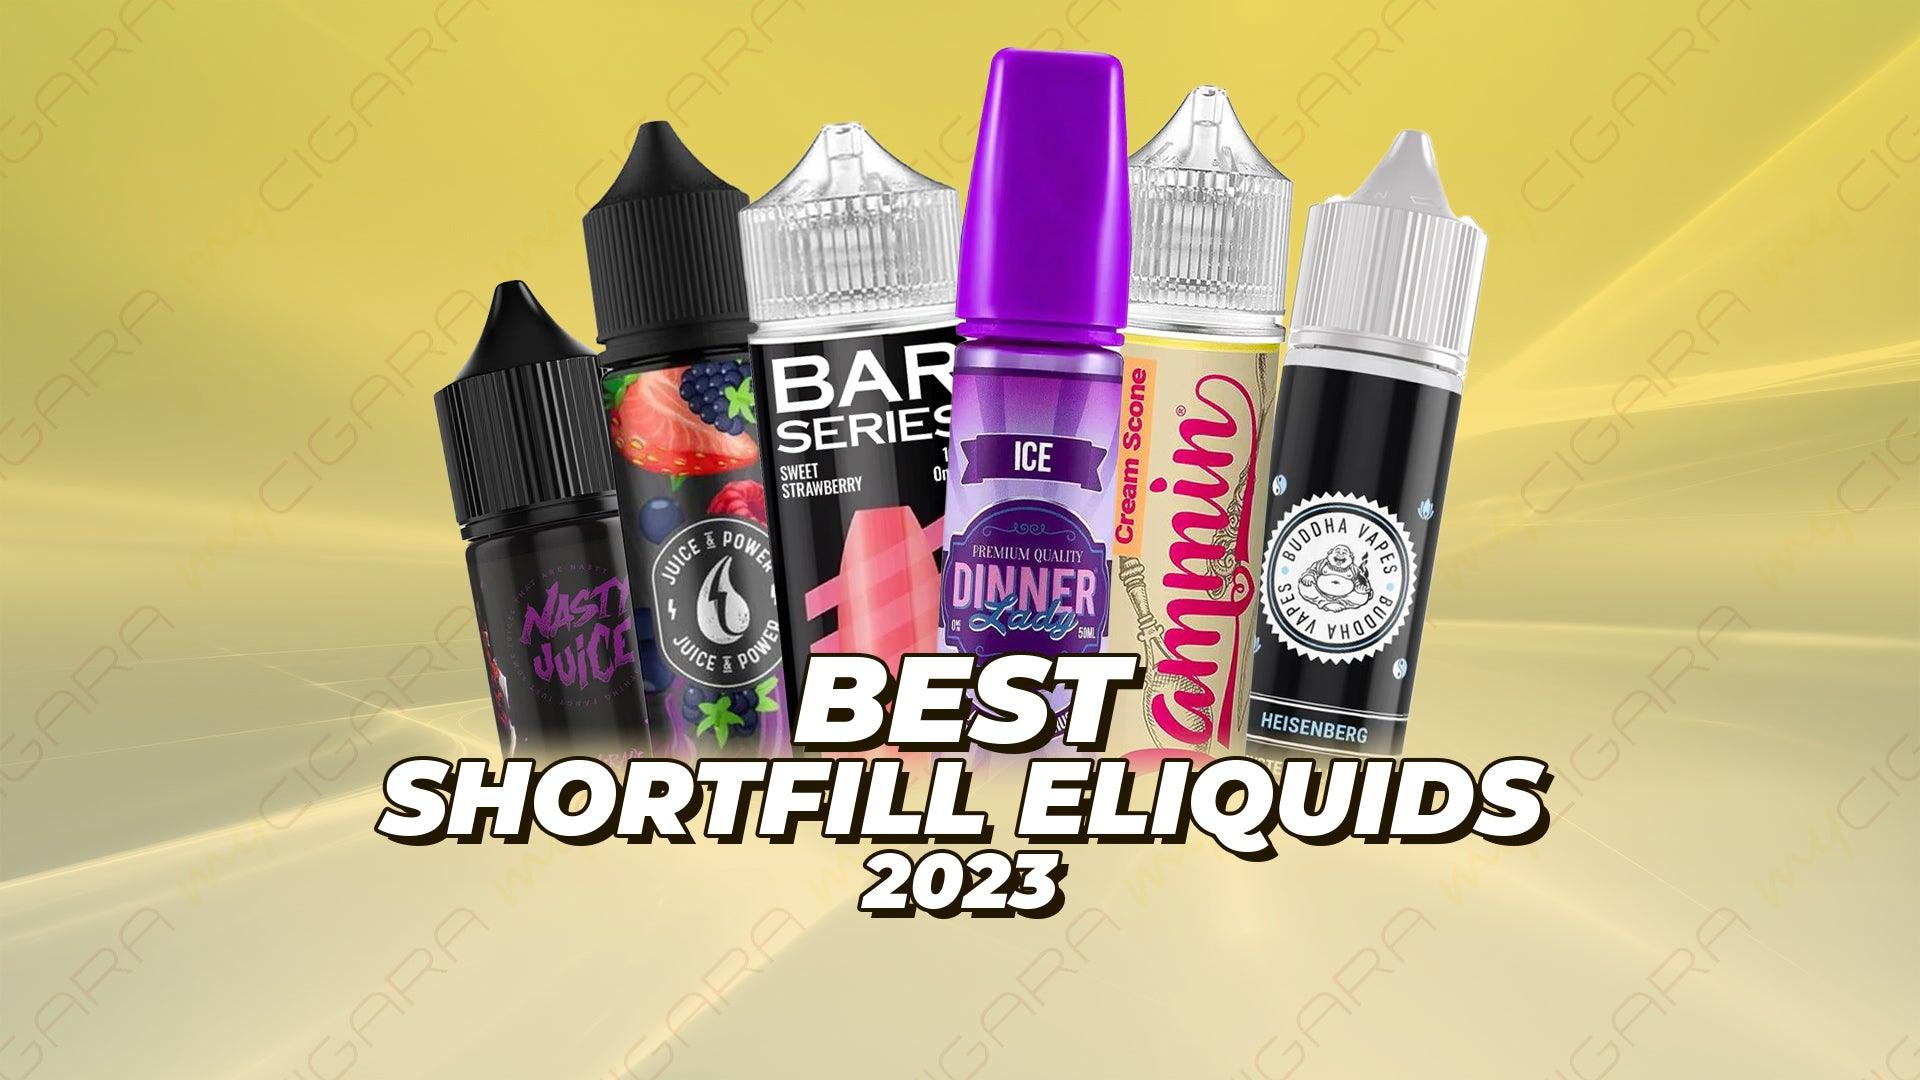 Best Shortfill Eliquids 2023 - Brand:Bar Series, Brand:Buddha Vape, Brand:Dinner Lady, Brand:Jammin, Brand:Juice N Power, Brand:Nasty Juice, Category:E-Liquids, Sub Category:Shortfills